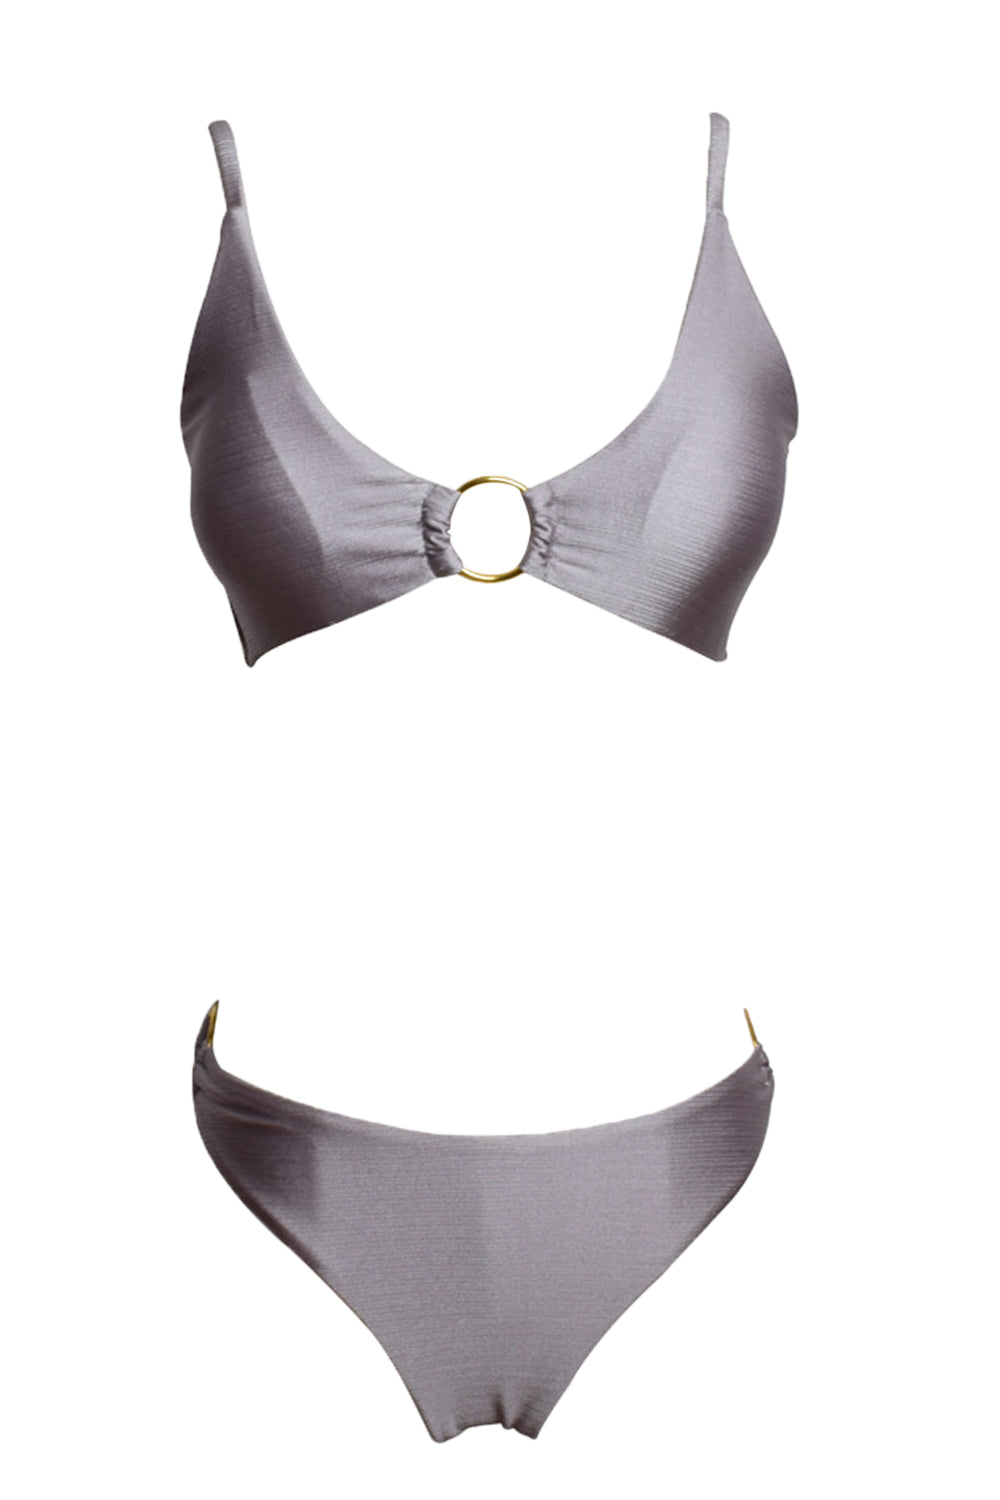 Iyasson Gray Inset Gold Rings Design Bikini Sets